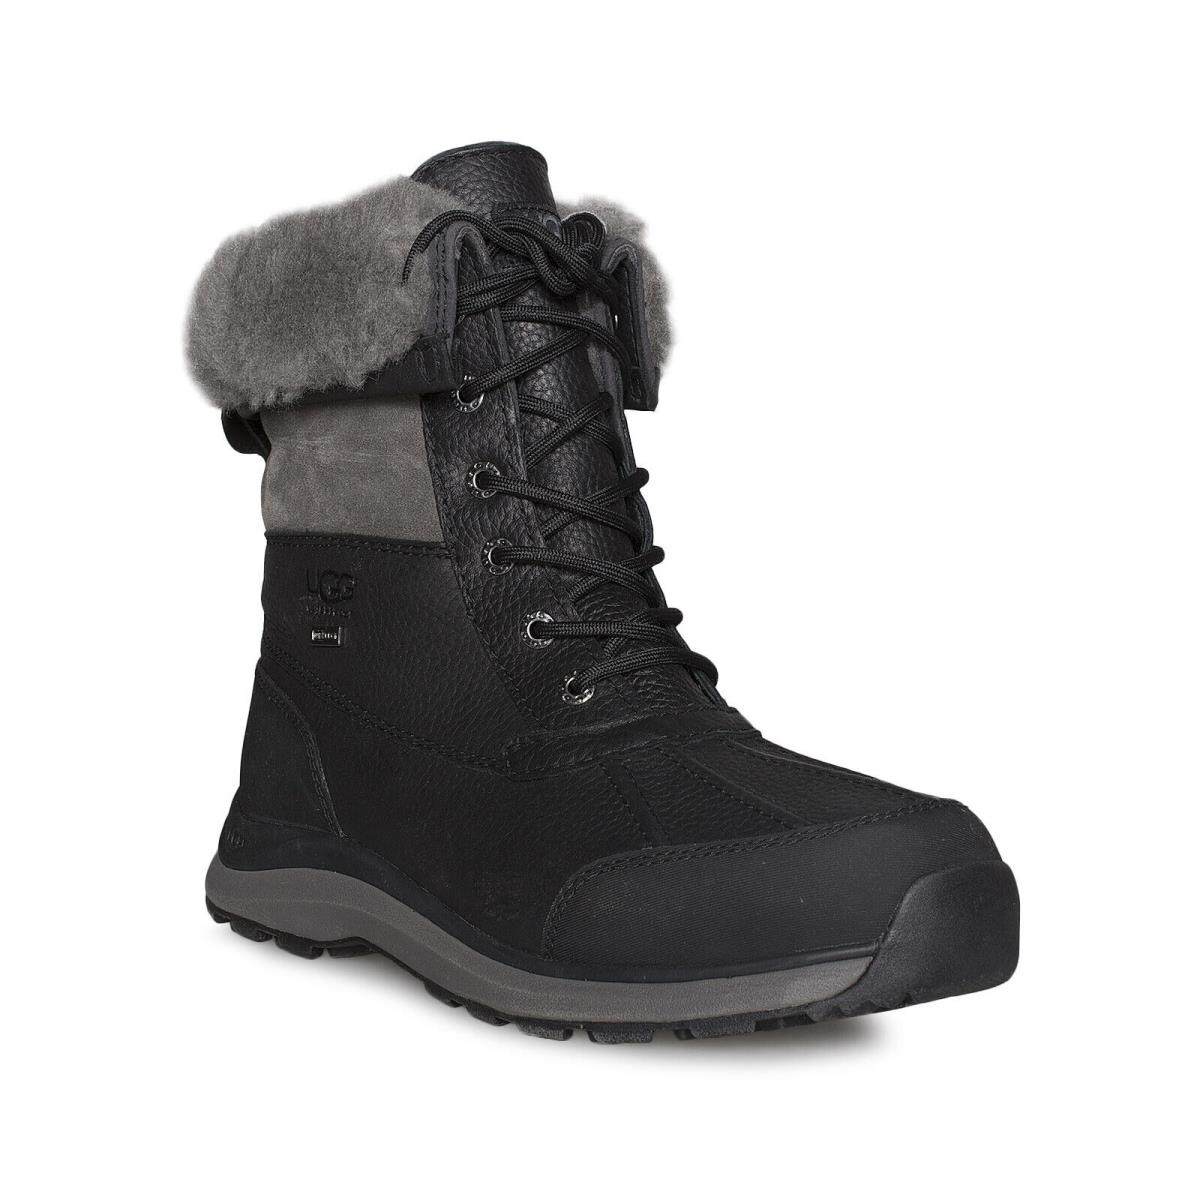 Ugg Adirondack Iii Black Waterproof Sheepskin Women`s Boots Size US 8.5